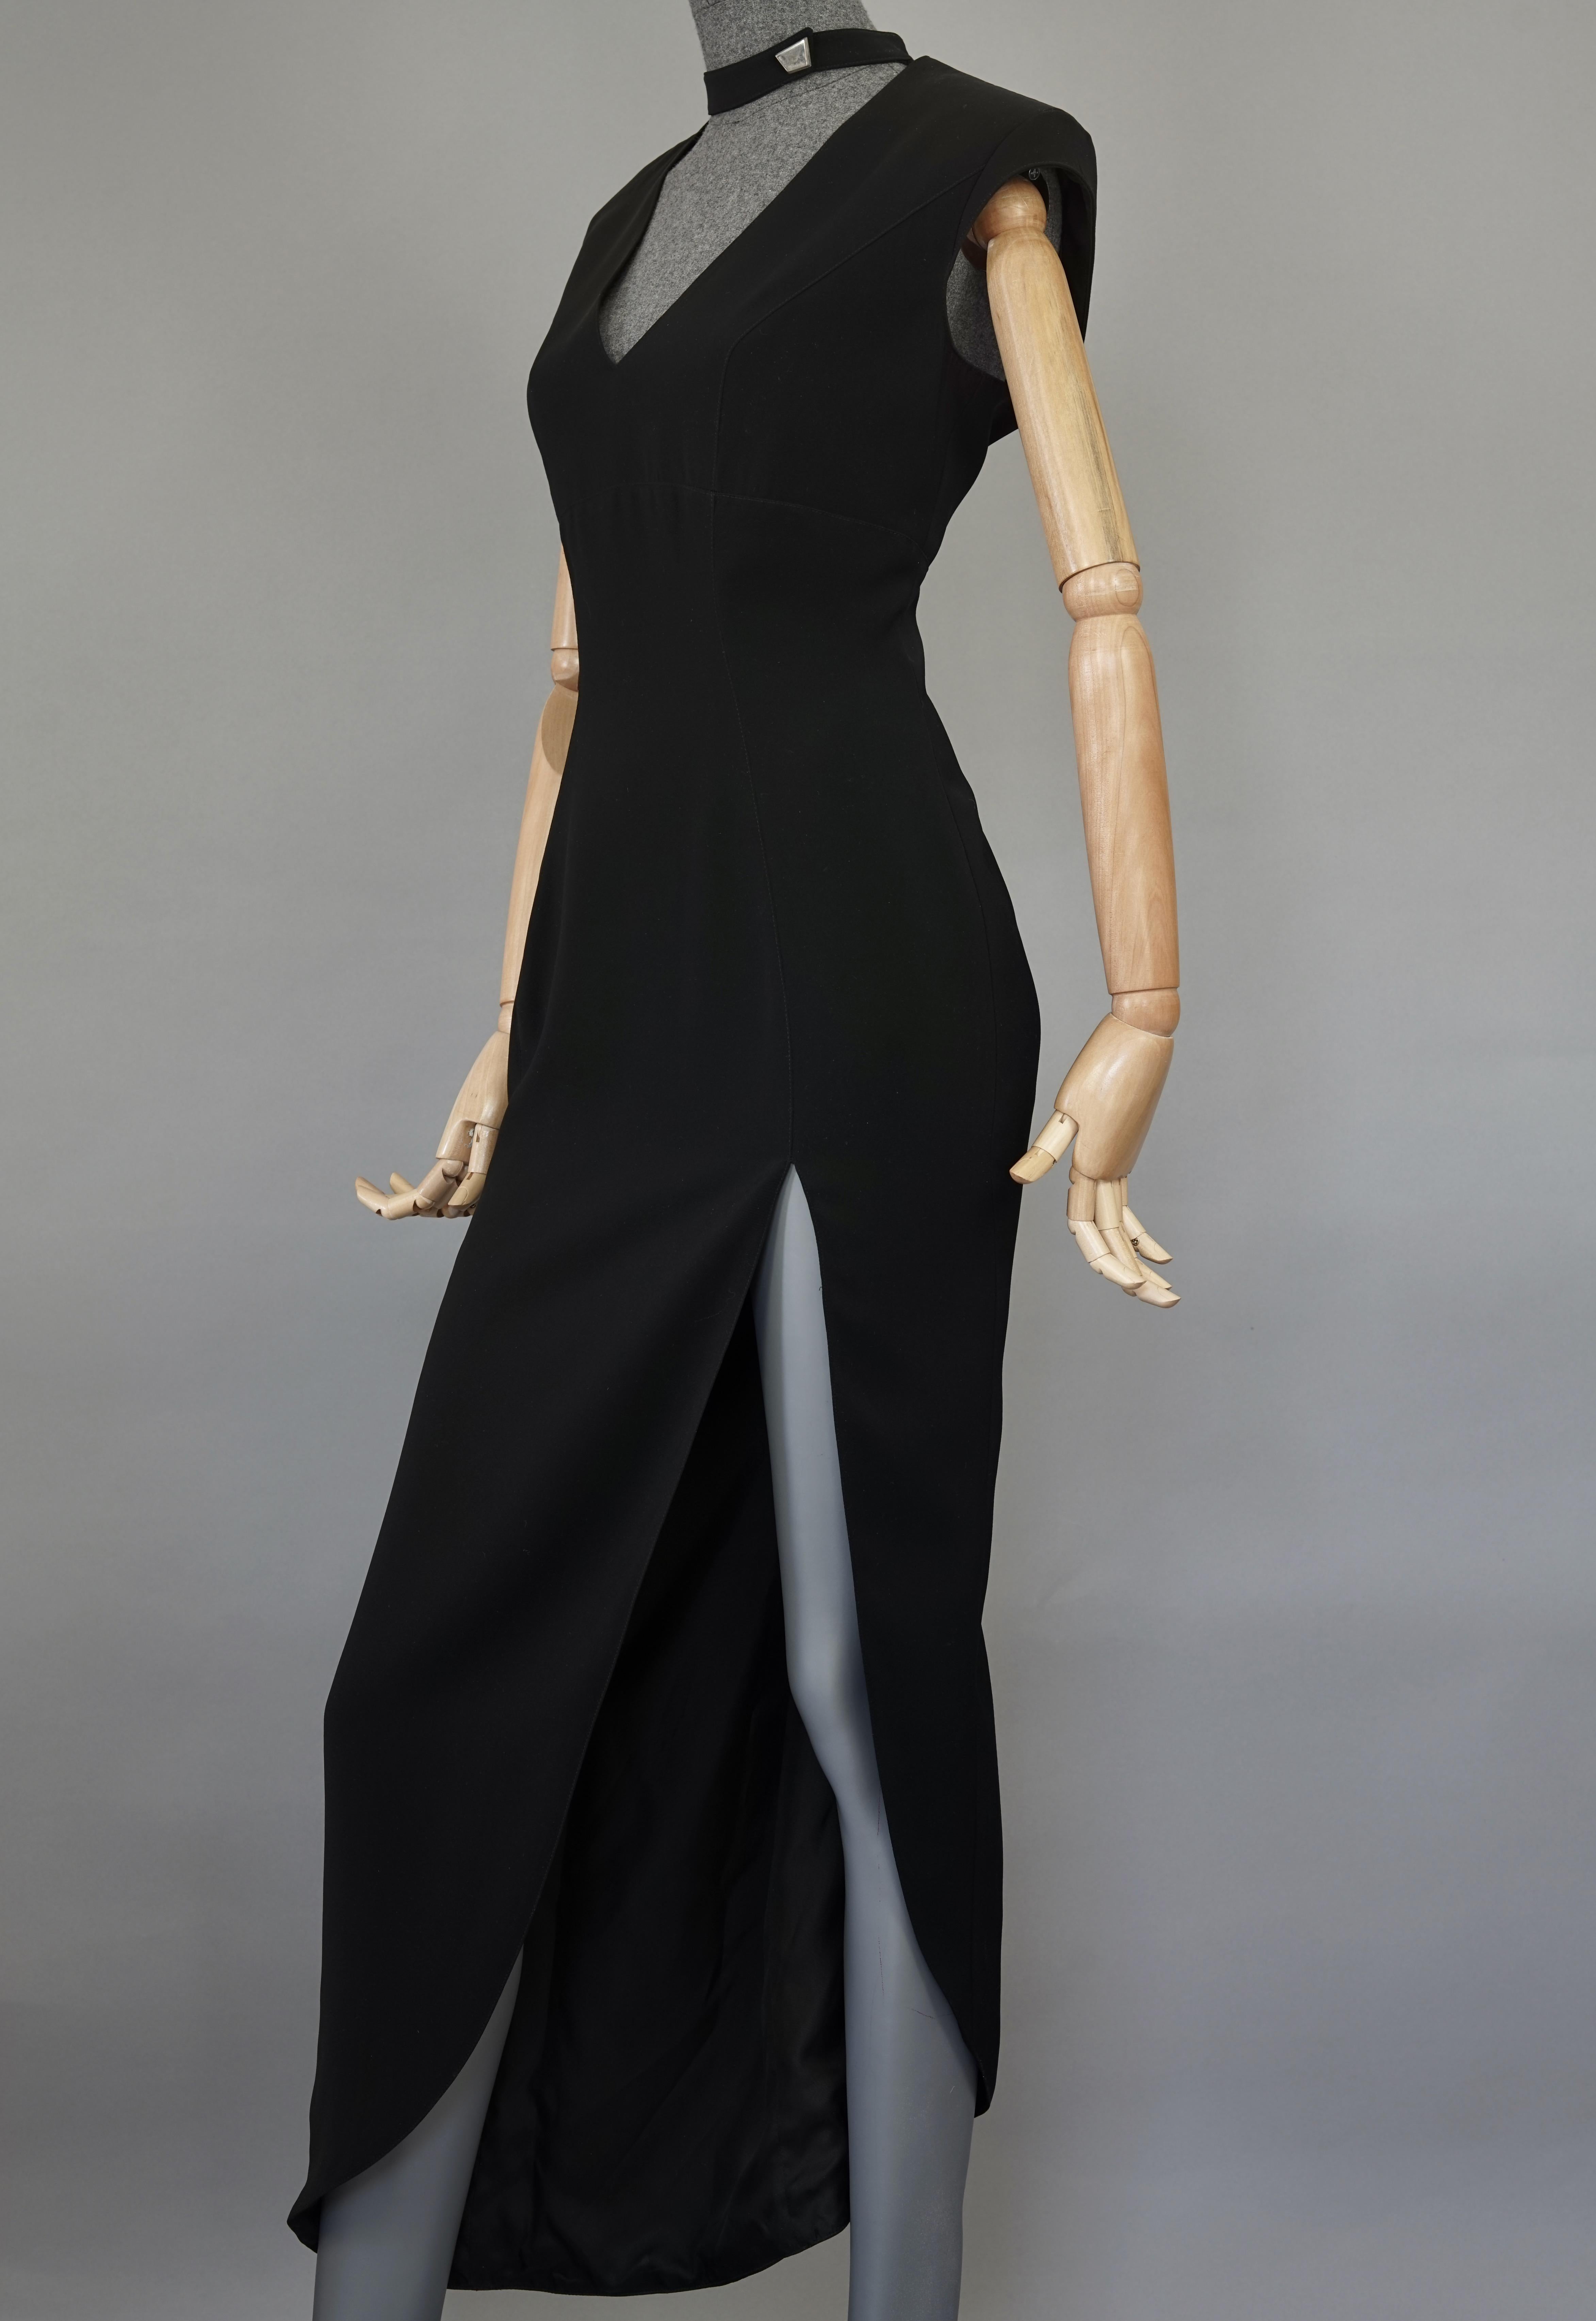 Vintage THIERRY MUGLER Cut Out Neckline Long Black Evening Dress

Measurements taken laid flat, please double bust, waist and hips:
Shoulder: 16.53 inches (42 cm)
Bust: 19.29 inches (49 cm)
Waist: 15.35 inches (39 cm)
Hips: 19.68 inches (50